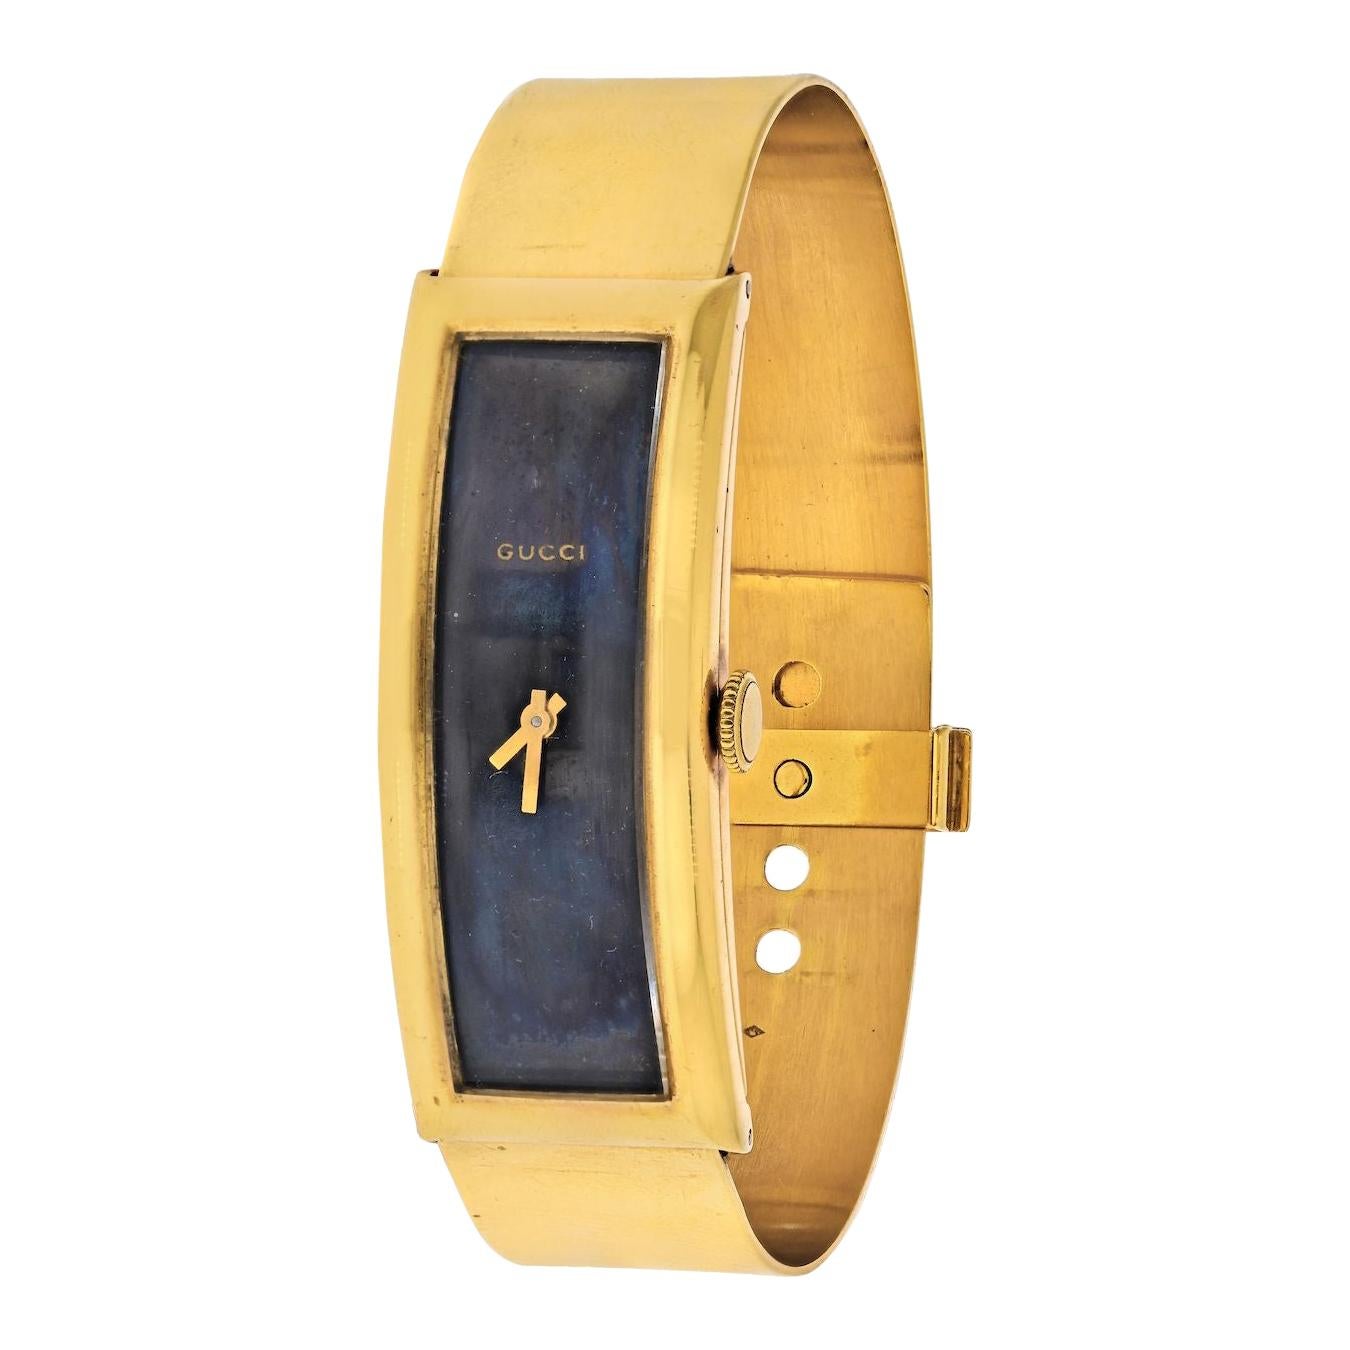 Gucci circa 1970s 18 Karat Yellow Gold Vintage Rectangular Watch